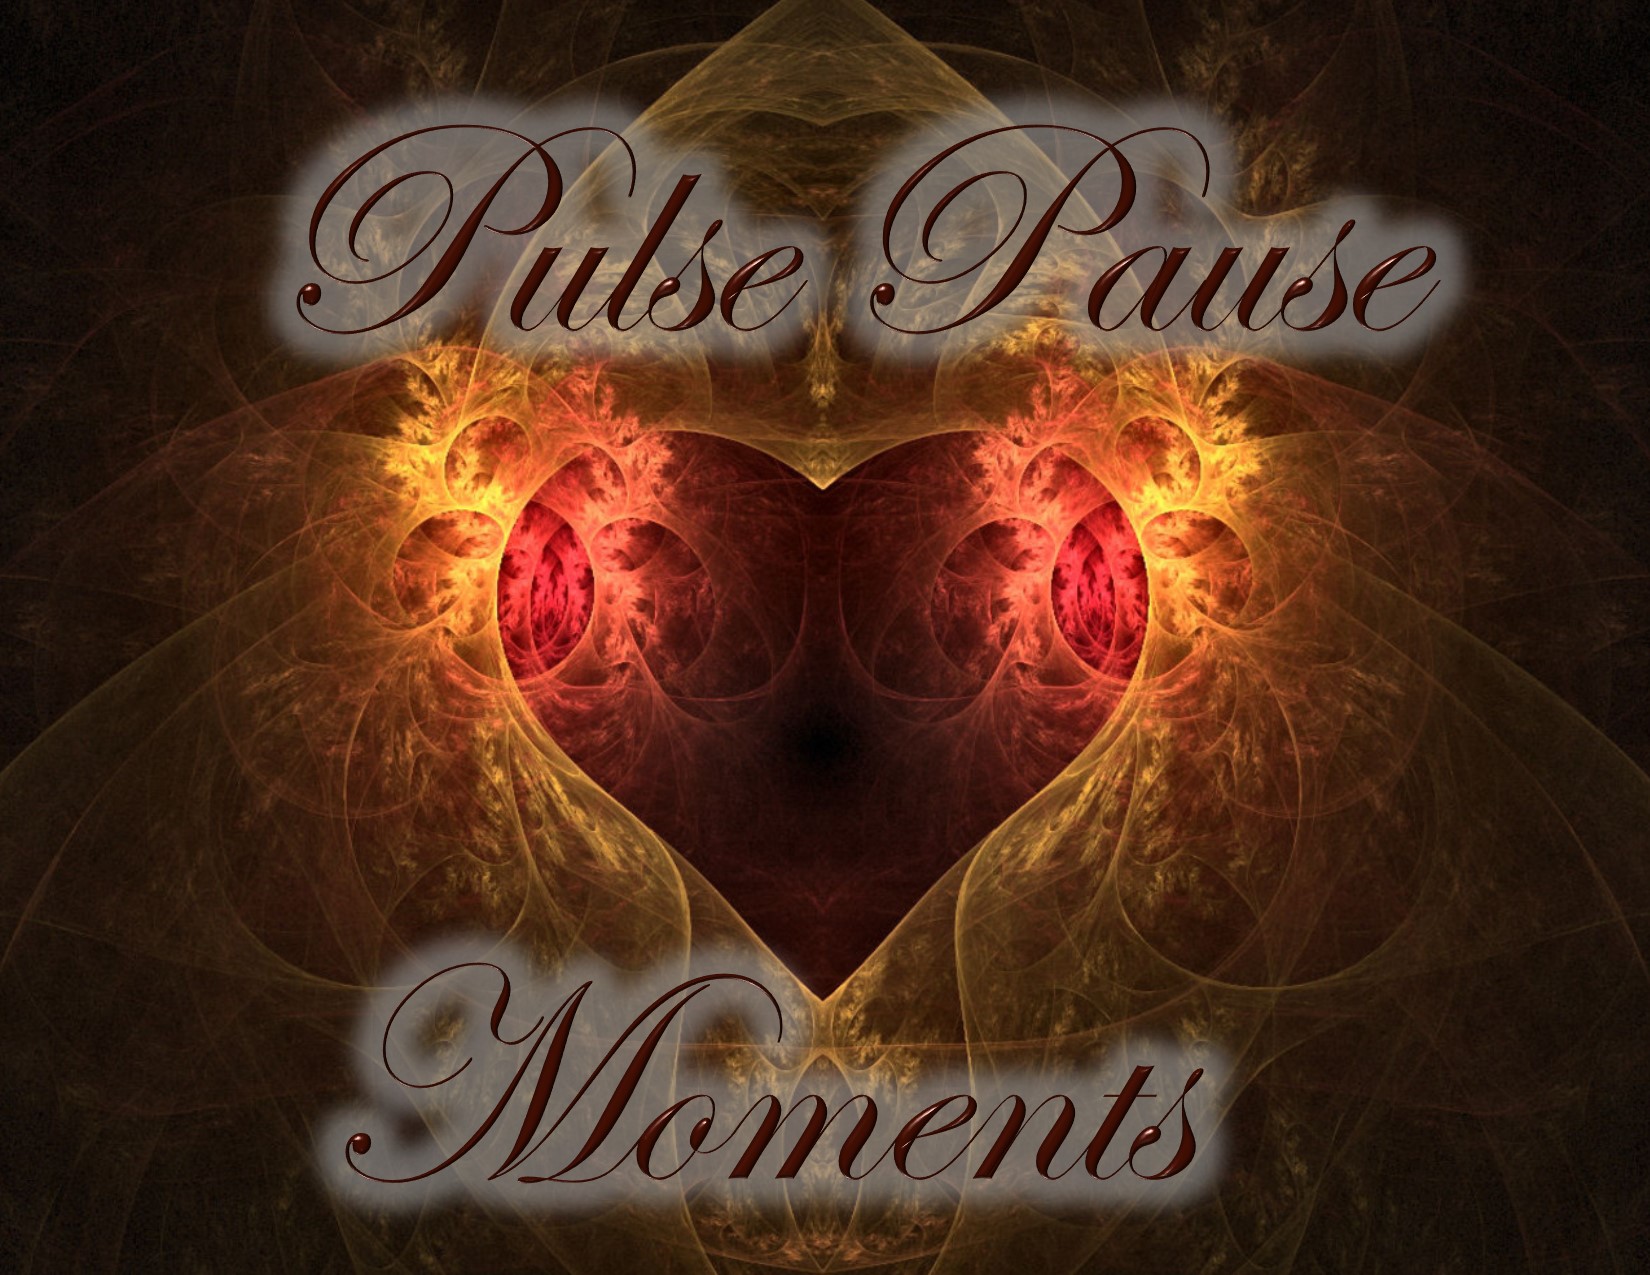 Pulse Pause Moments – Outlander Redux